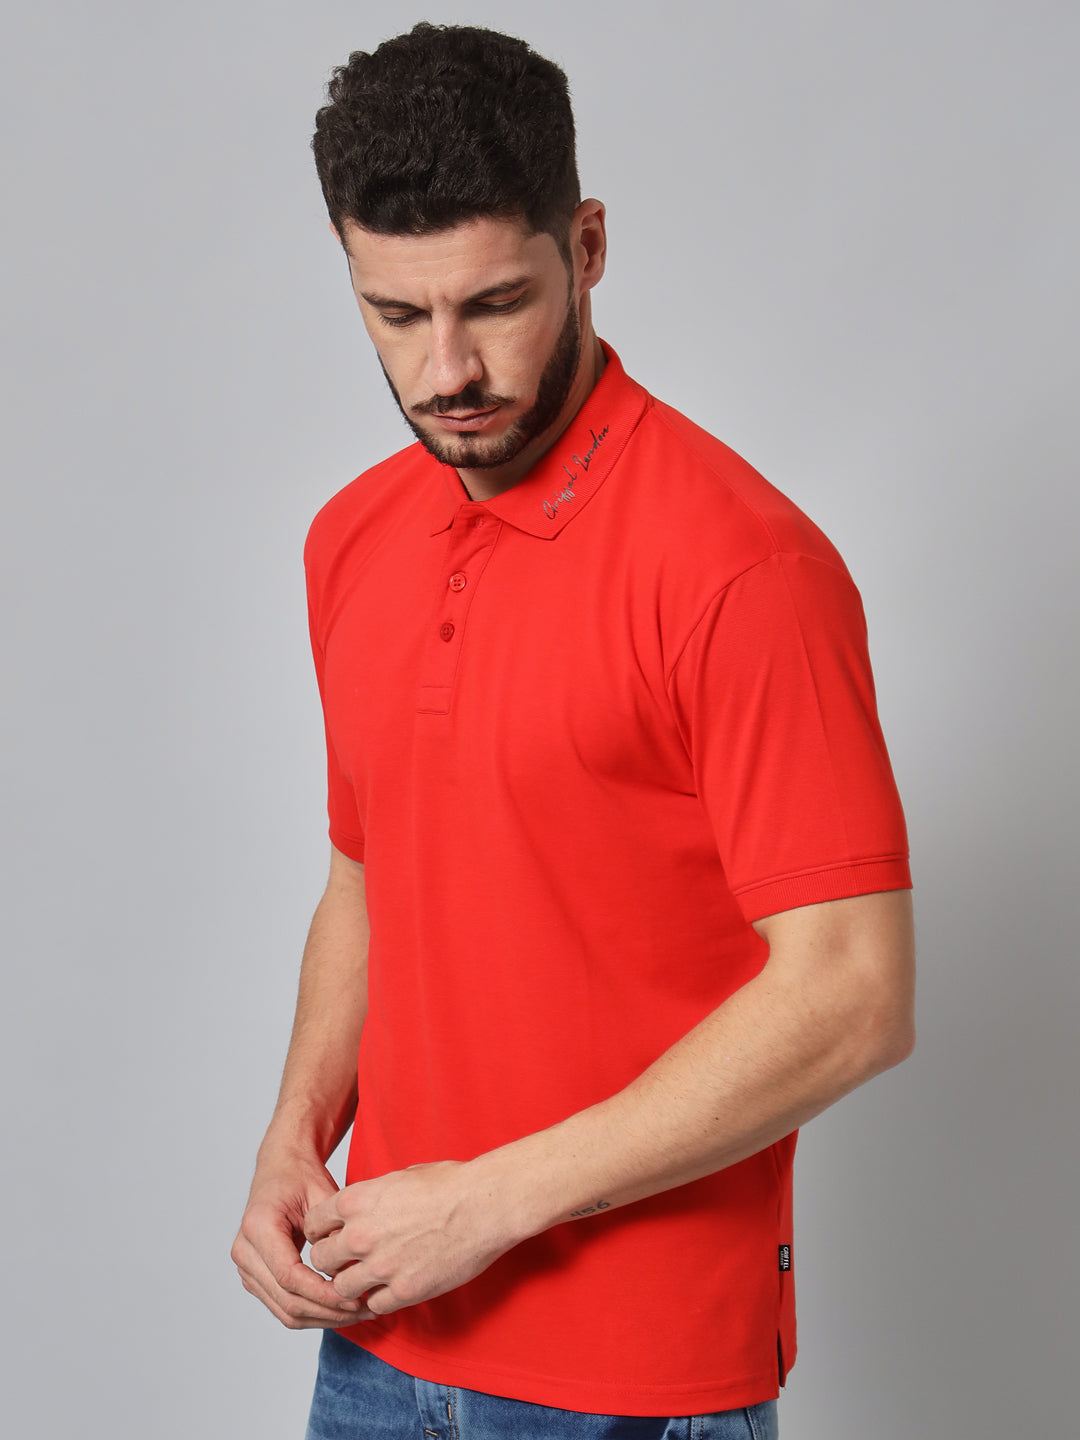 GRIFFEL Men's Red Cotton Polo T-shirt - griffel